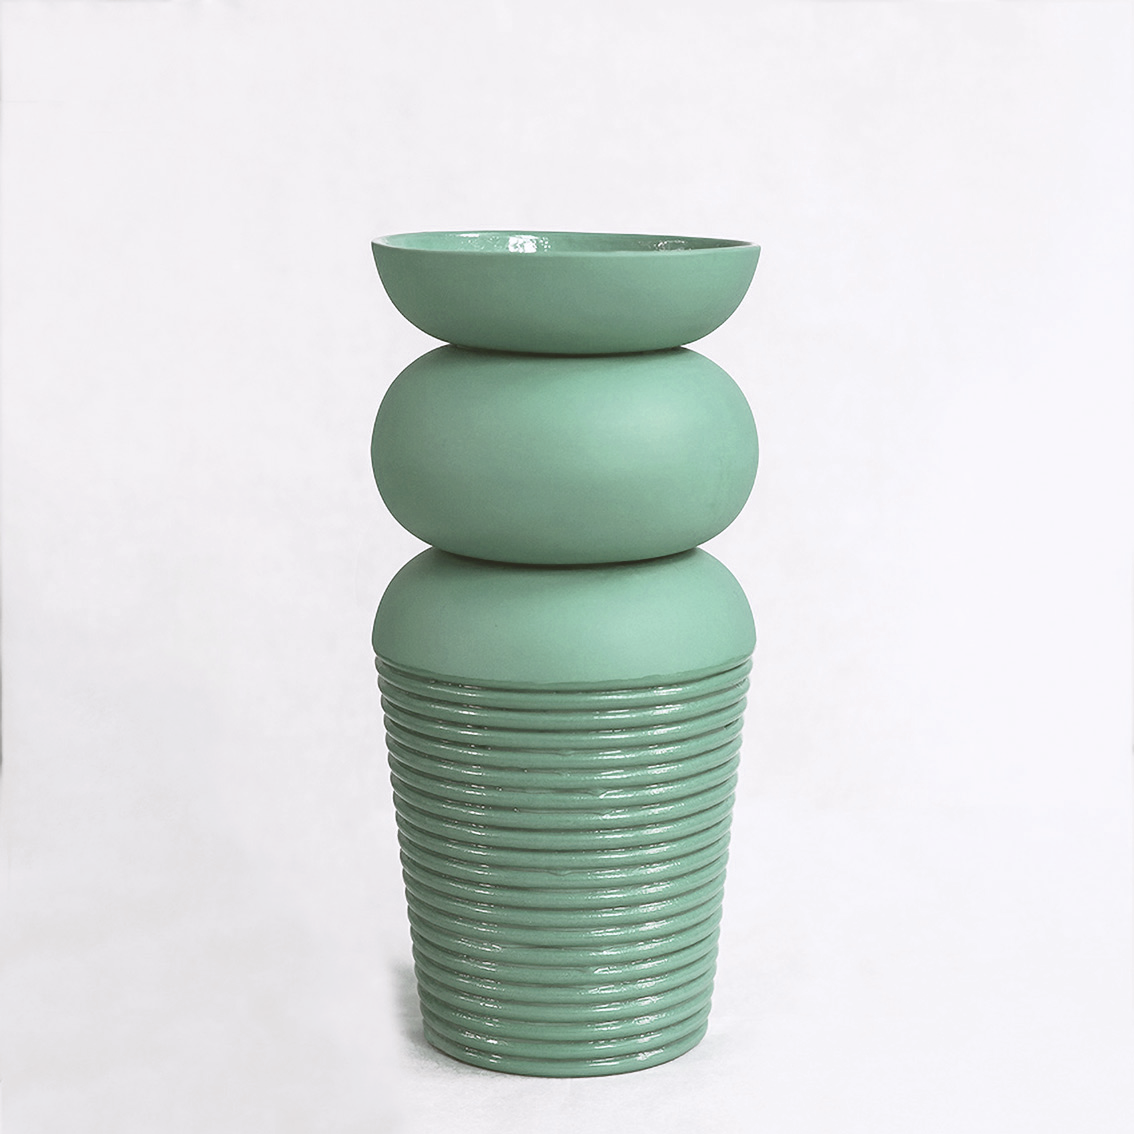 #ribbel #vase #saudade #saudadecollective #saudade_collective #collective #craftsmanship #collaboration #studioinekevanderwerff